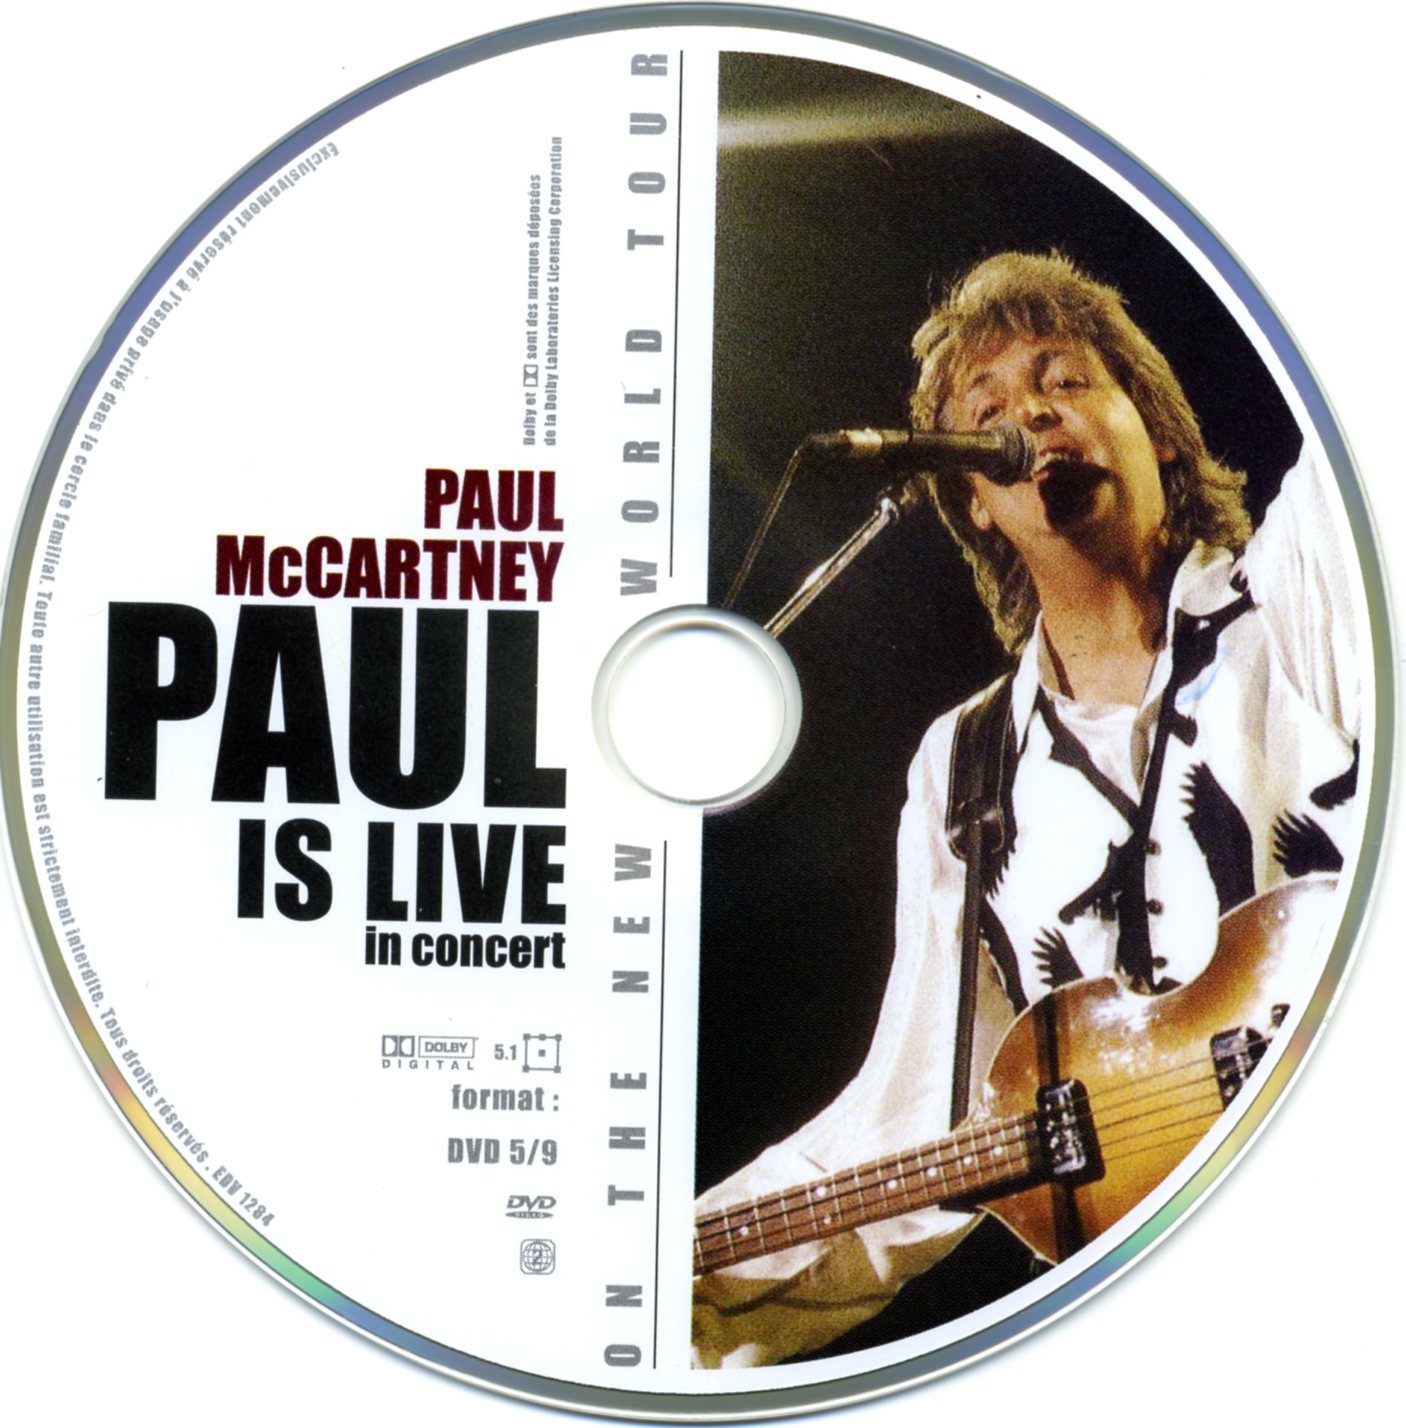 Paul McCartney is Live in Concert